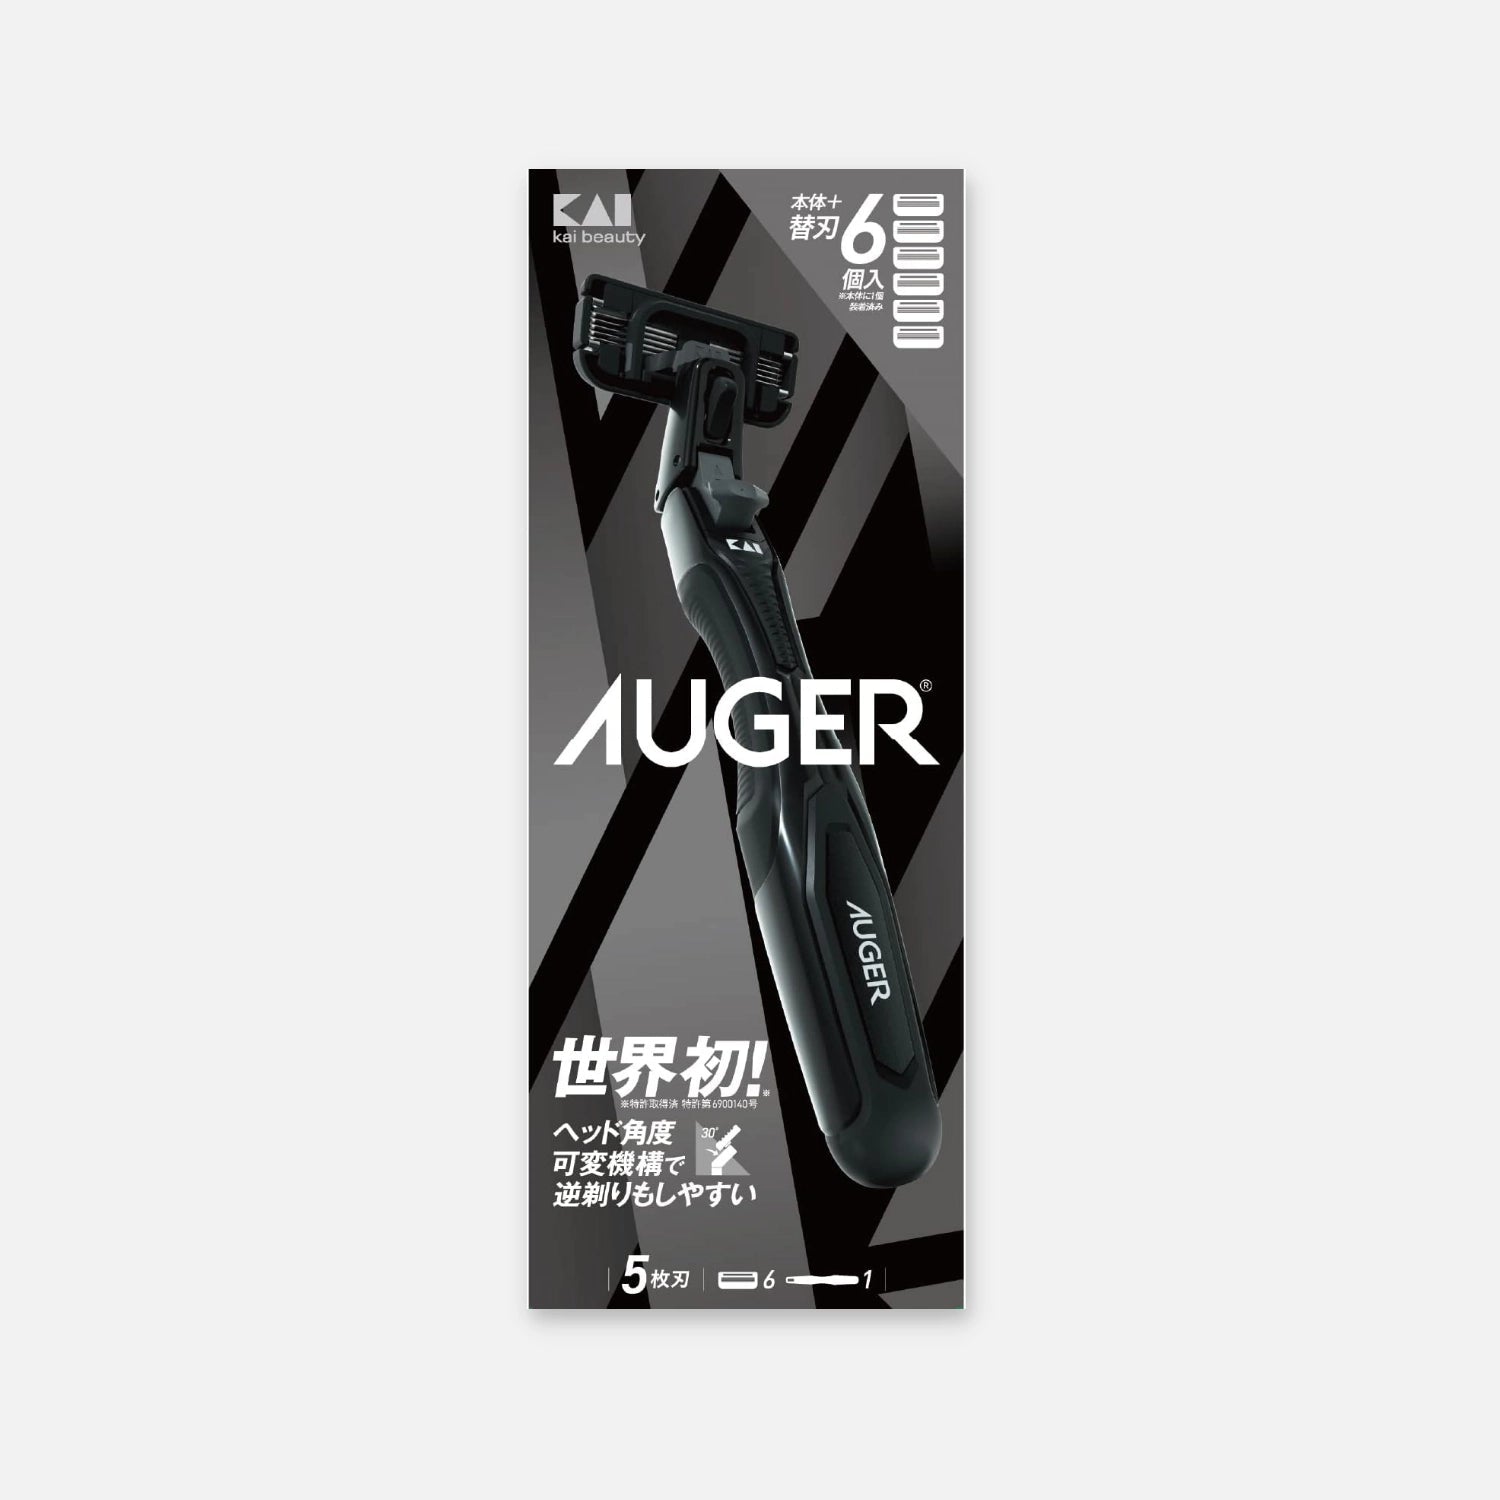 KAI Auger 5-Blade Razor Pack (Main Unit + 6 Replacement Blades) - Buy Me Japan